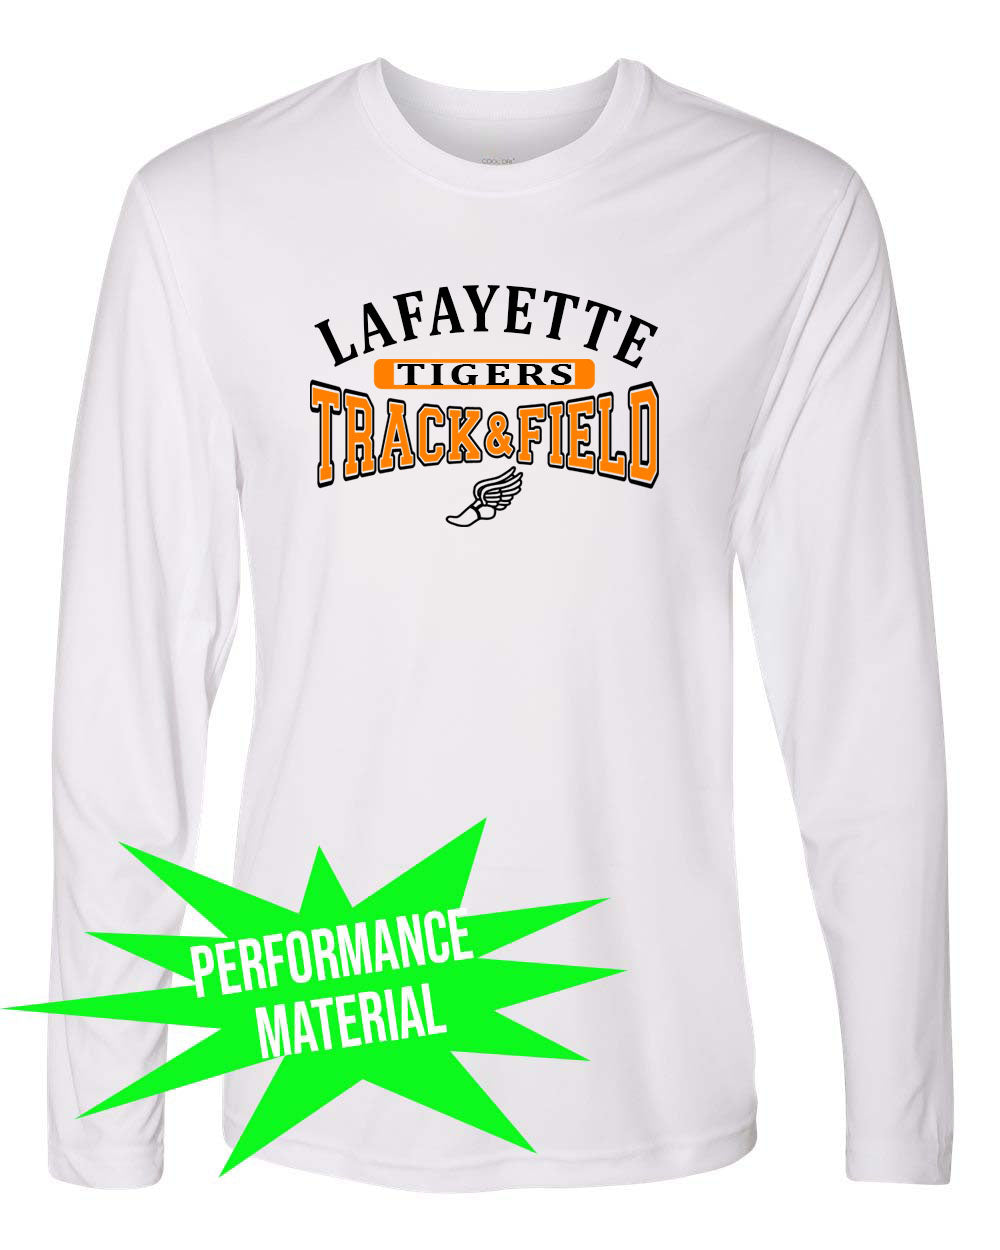 Lafayette Track Performance Material Long Sleeve Shirt Design 2